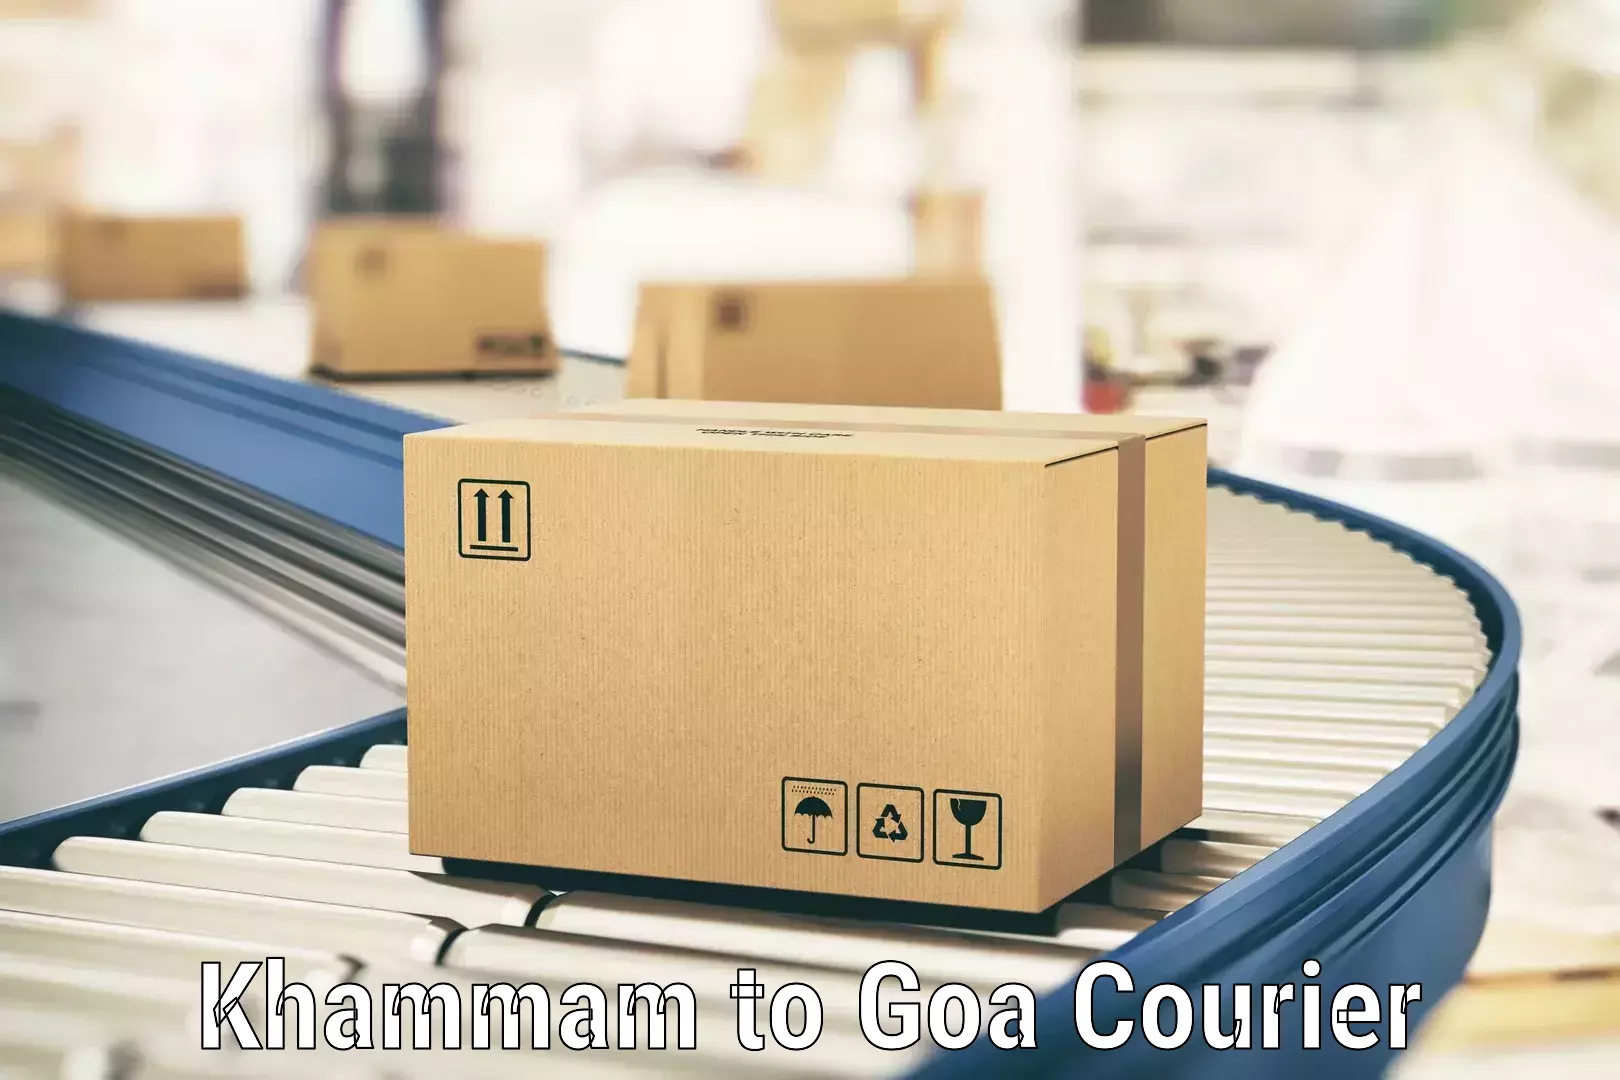 Courier service comparison Khammam to Panjim